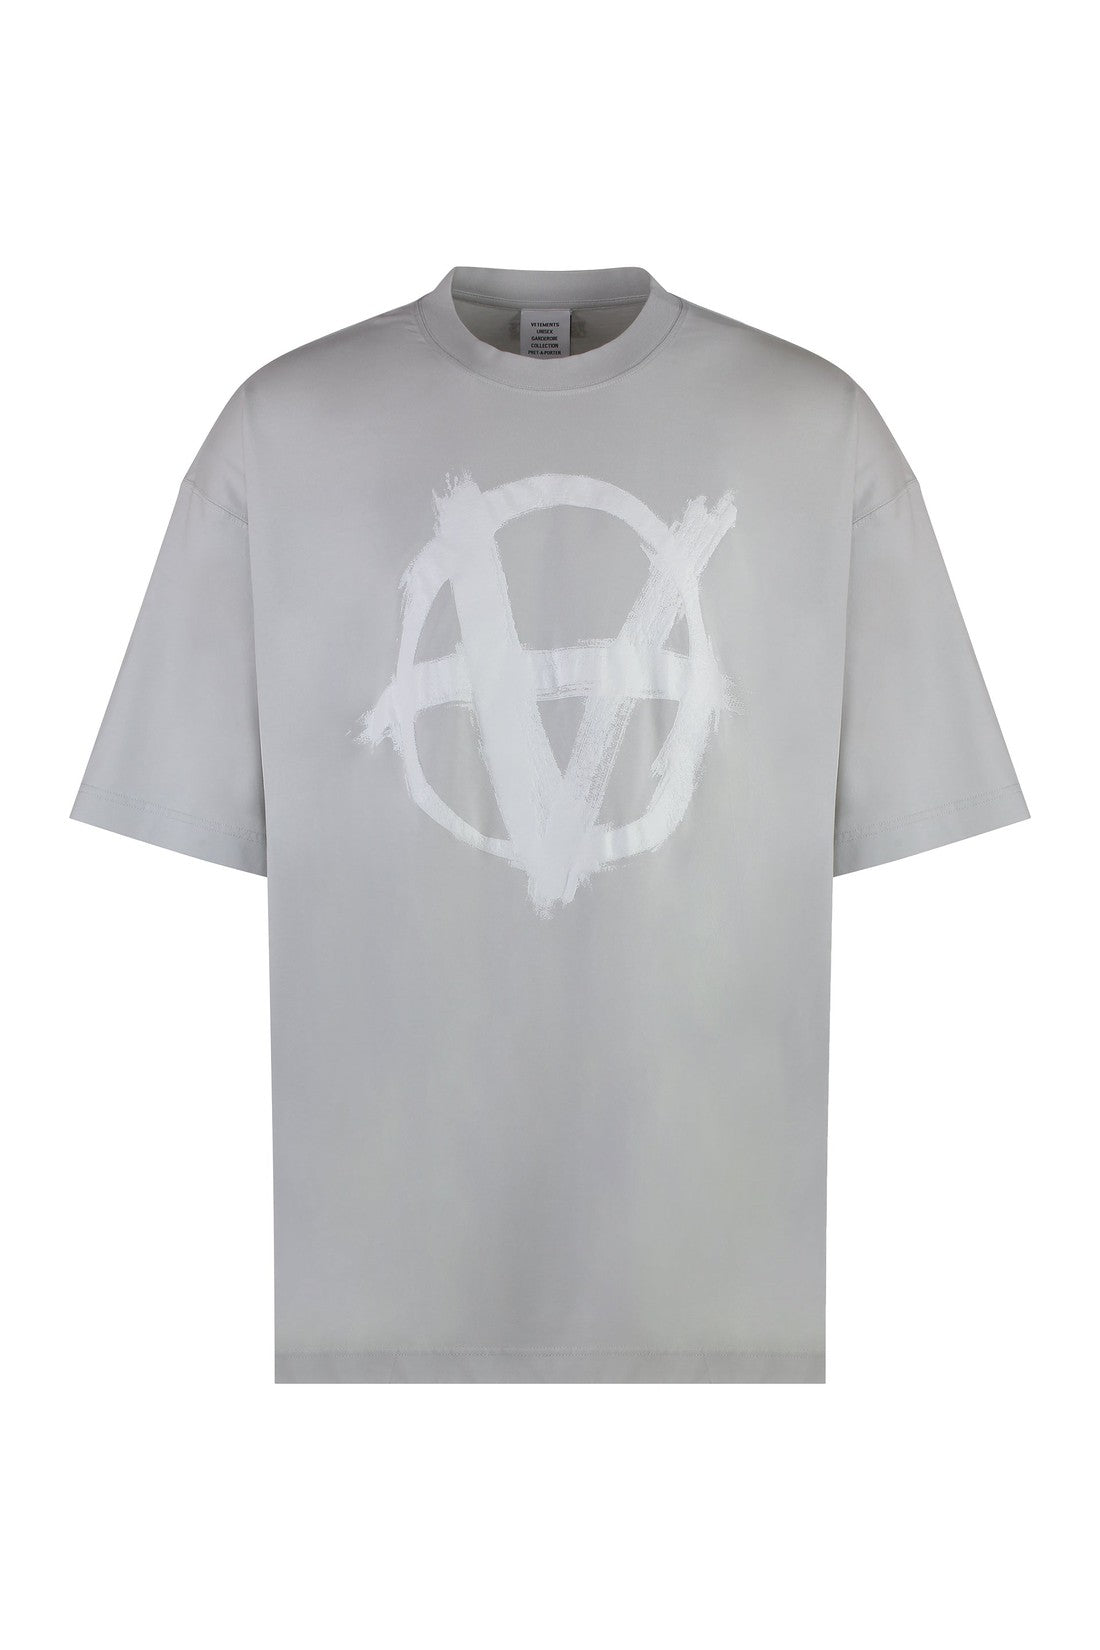 Reverse Anarchy cotton T-shirt